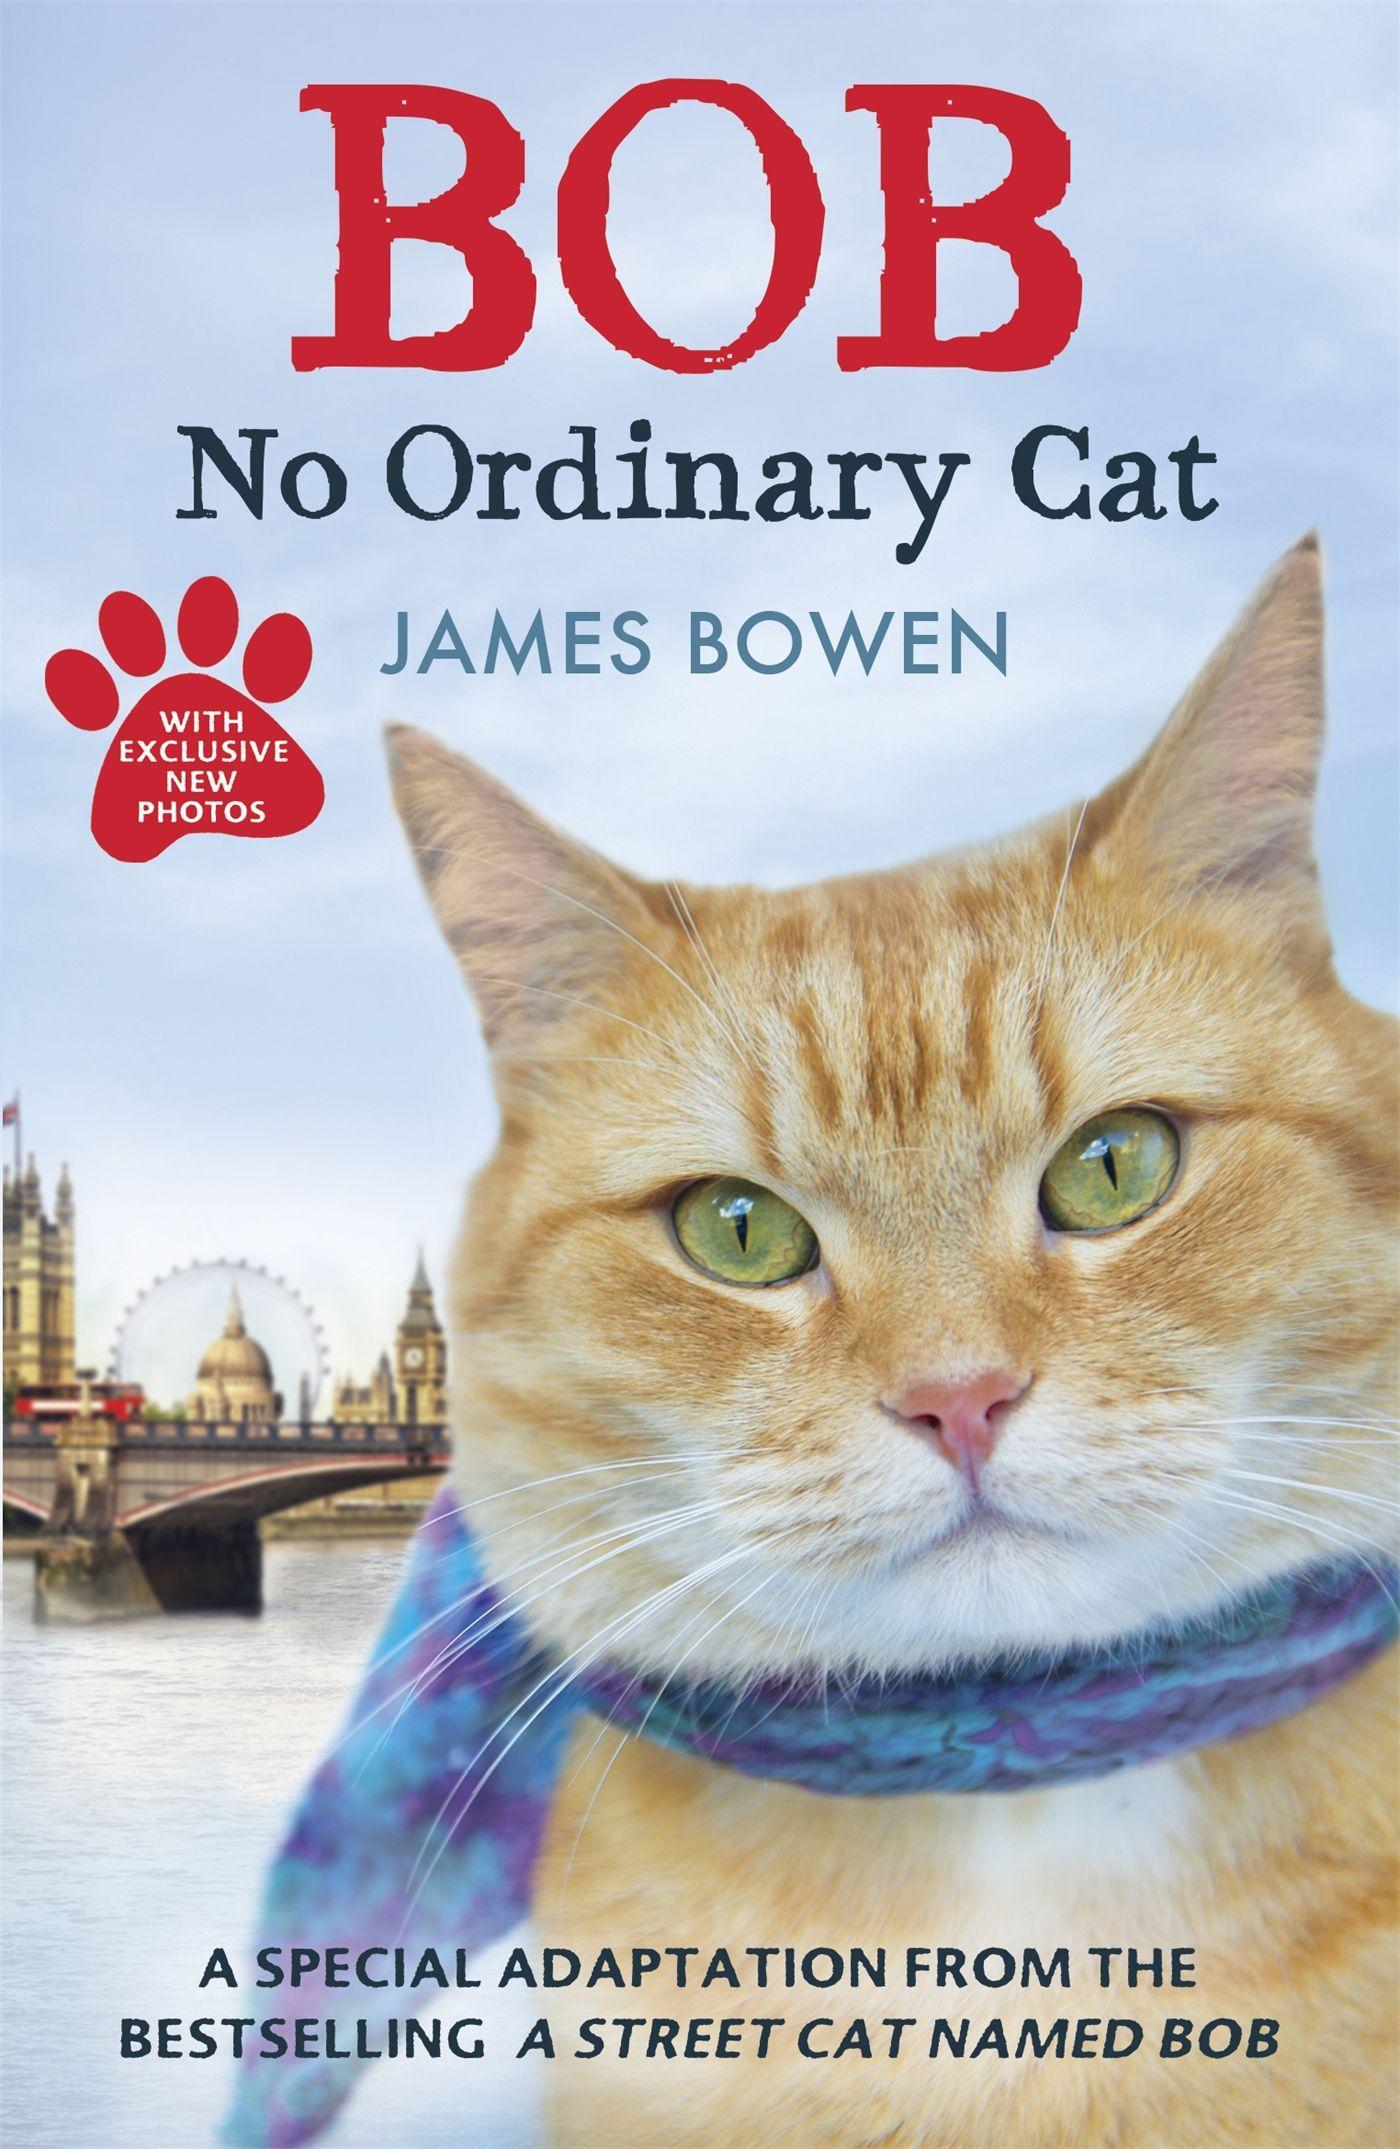 Bob - No Ordinary Cat / James Bowen / Taschenbuch / 298 S. / Englisch / 2013 / Hodder And Stoughton Ltd. / EAN 9781444764901 - Bowen, James